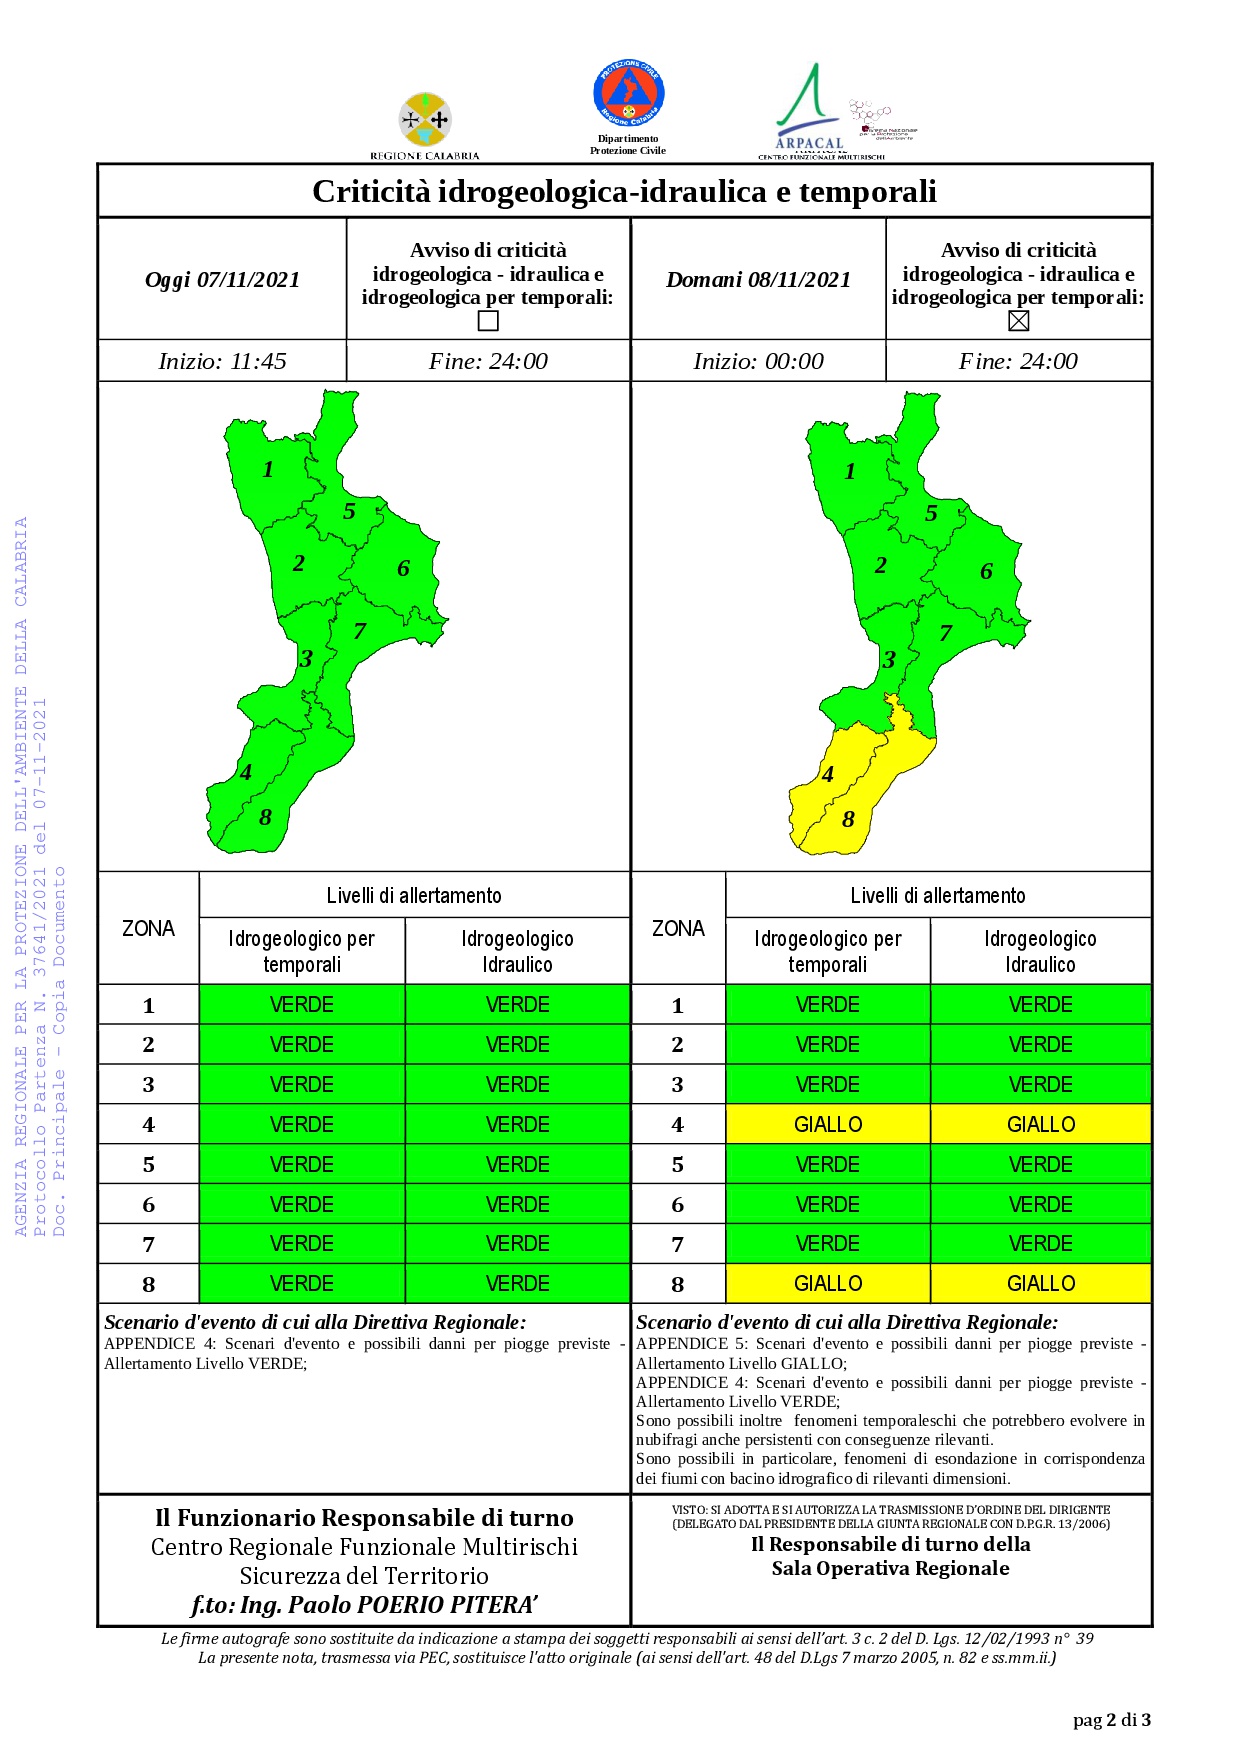 Criticità idrogeologica-idraulica e temporali in Calabria 07-11-2021